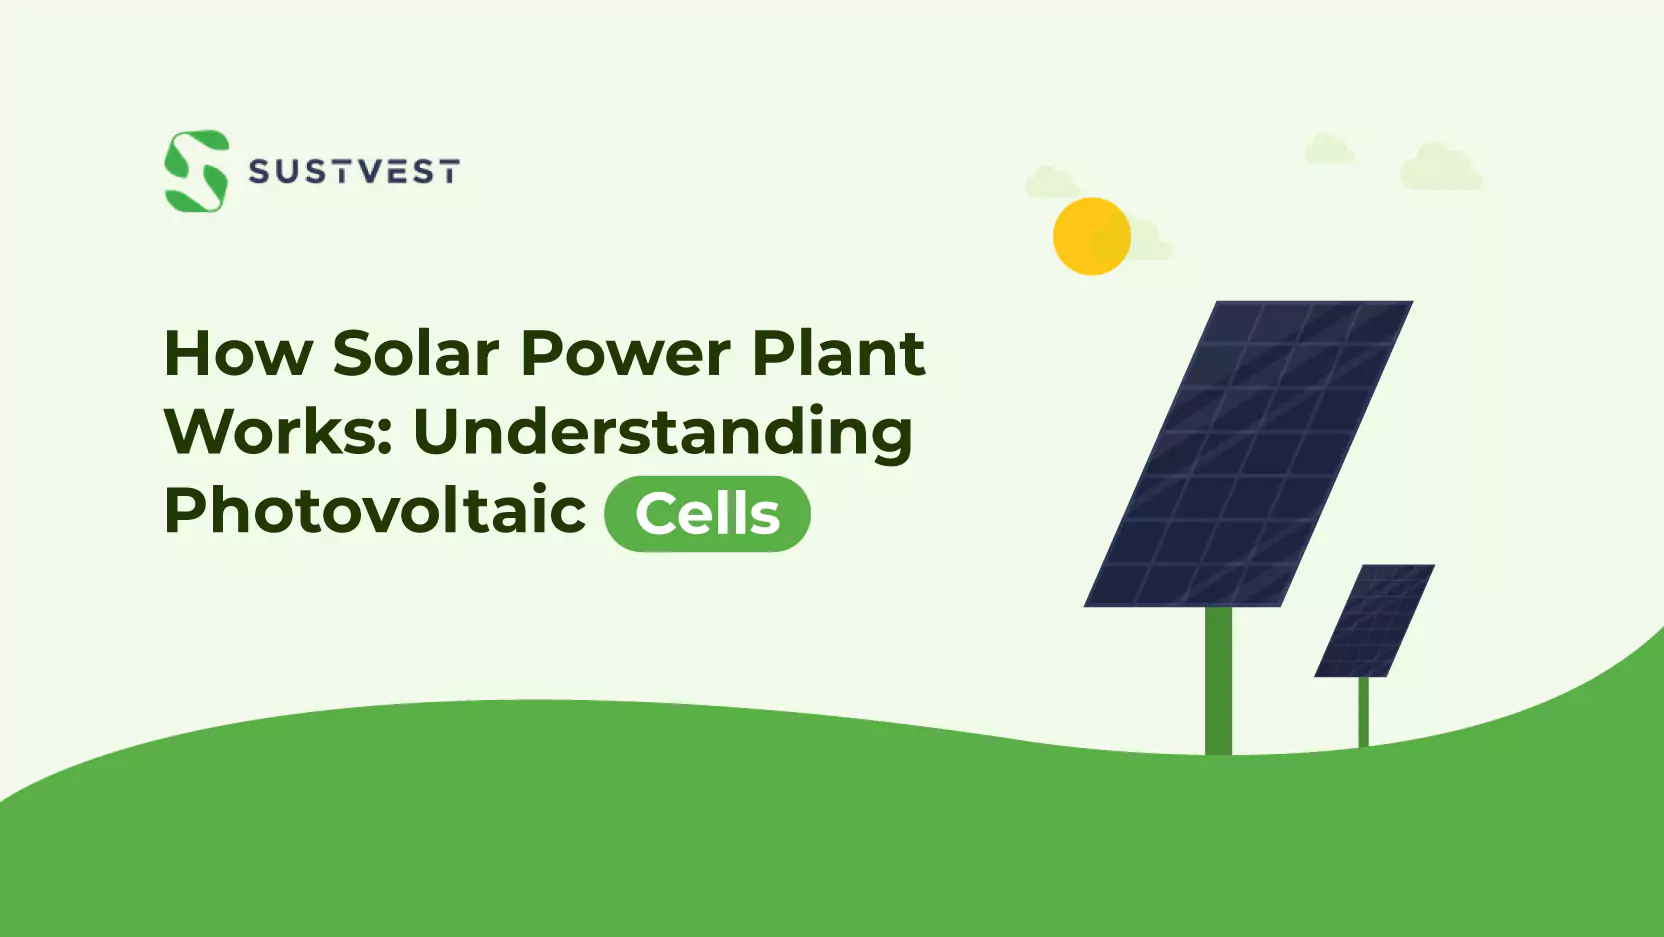 How solar power plants work
